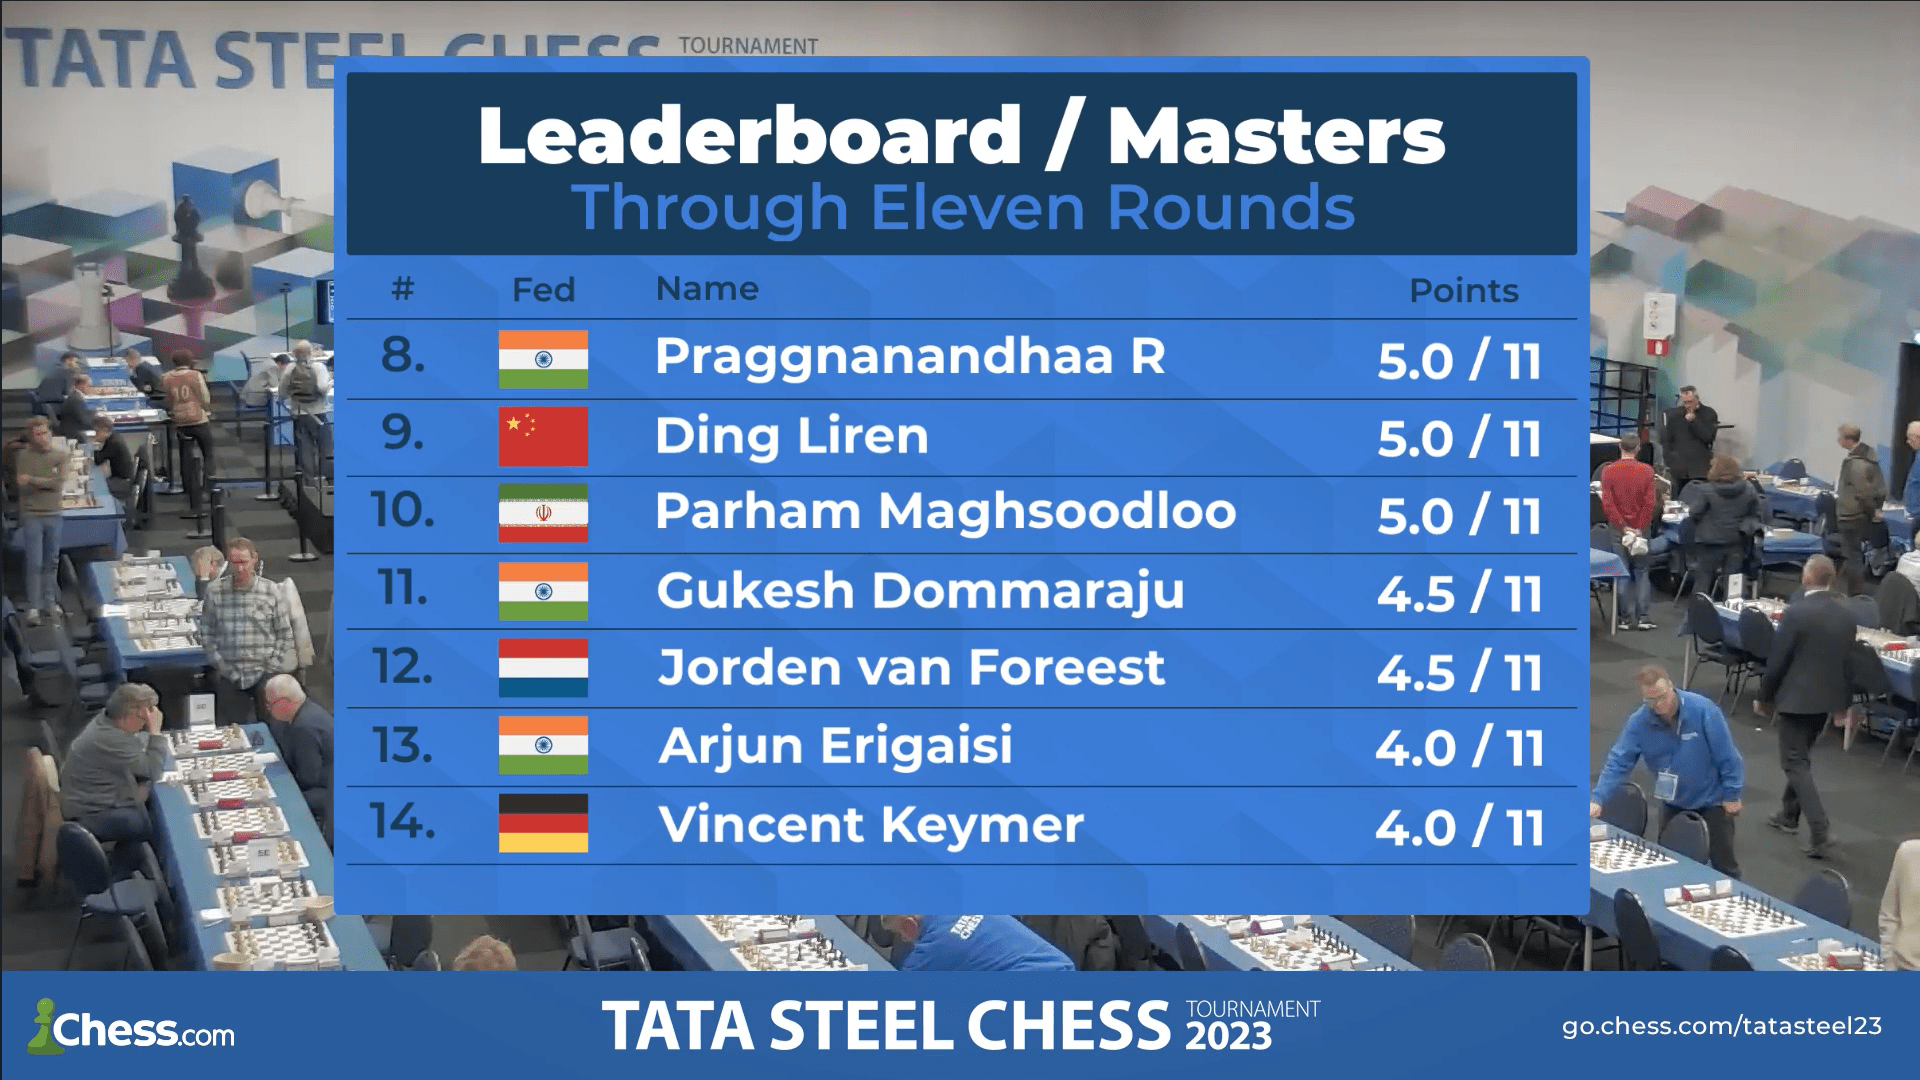 Tata Steel Masters 11: Maghsoodloo beats Pragg